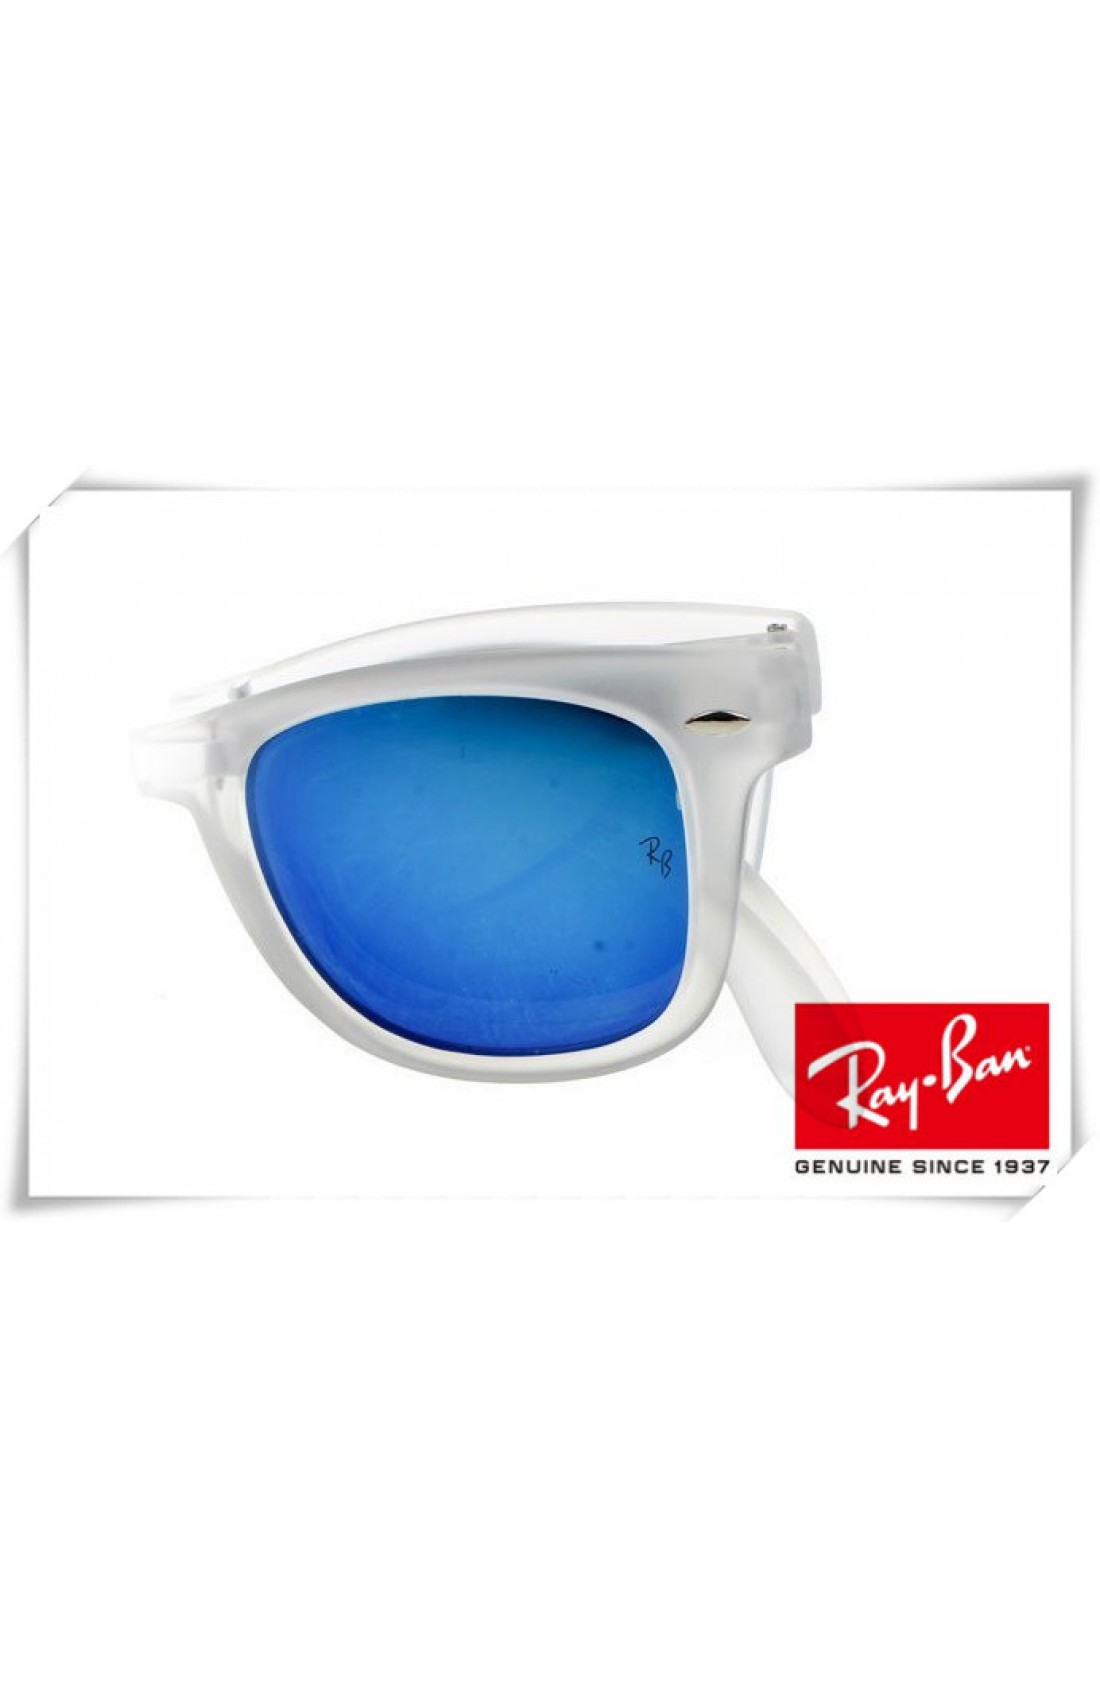 wayfarer sunglasses blue lens